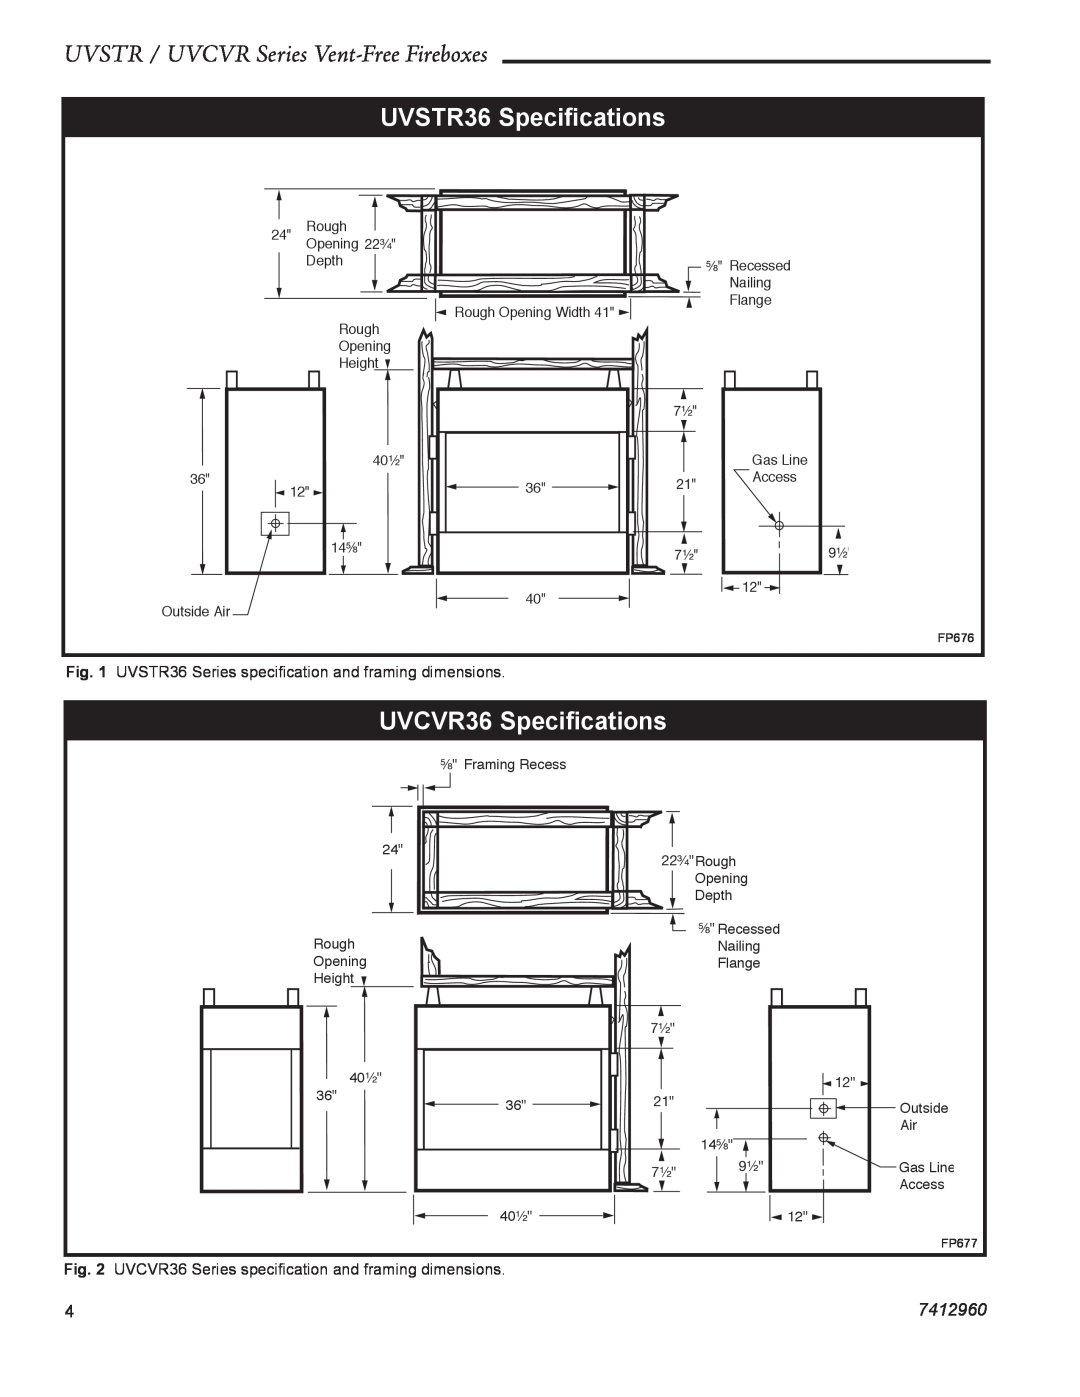 CFM dimensions UVSTR / UVCVR Series Vent-Free Fireboxes, UVSTR36 Speciﬁcations, UVCVR36 Speciﬁcations, 7412960 